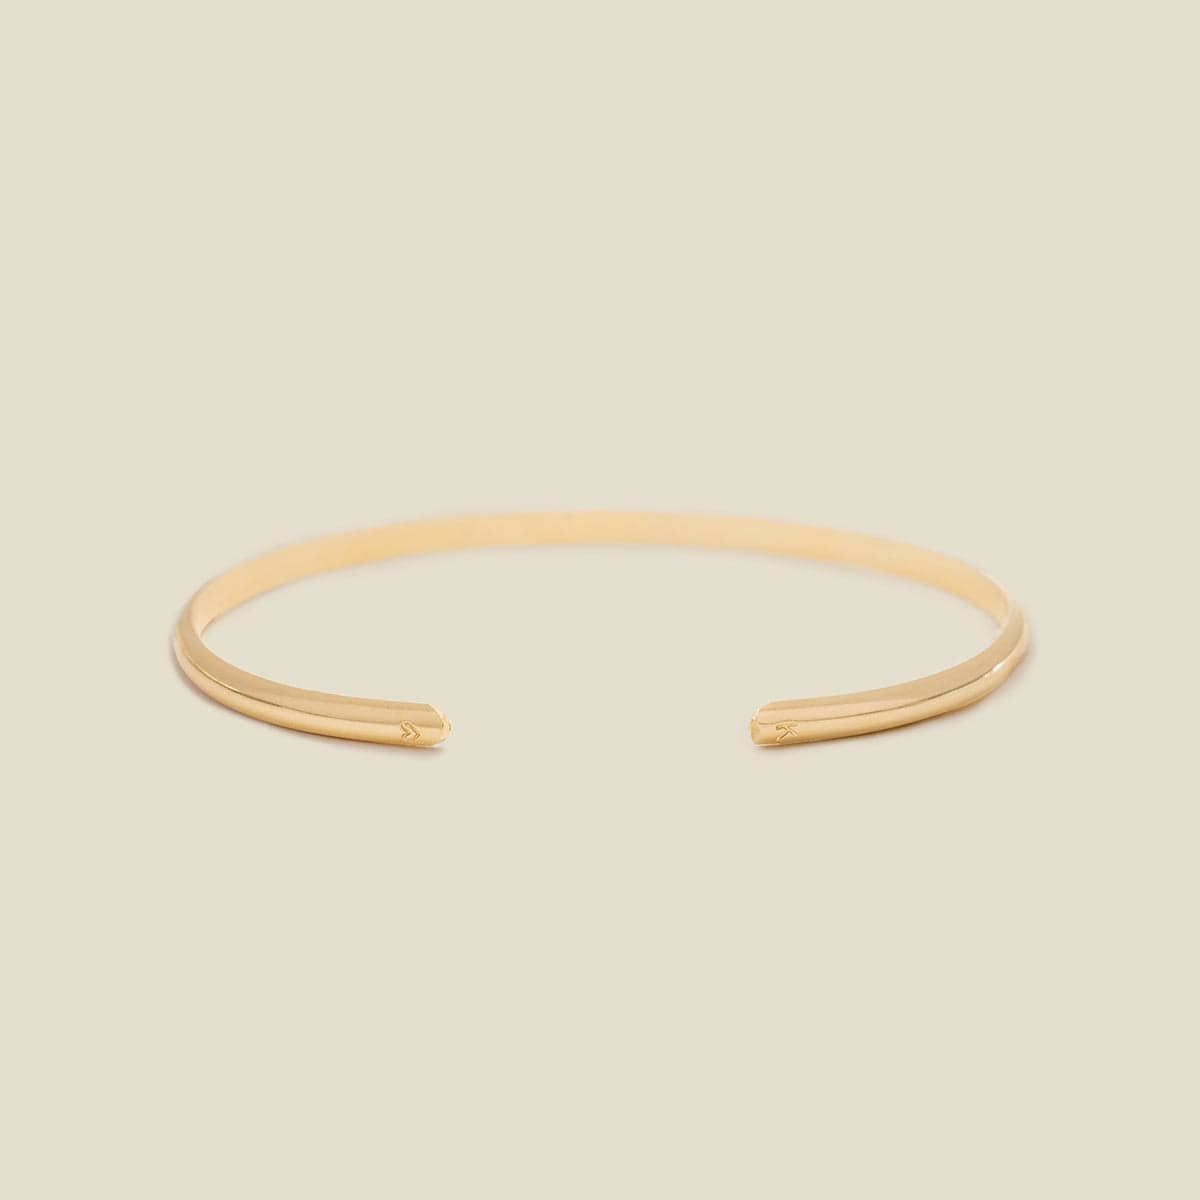 Custom Luster Rounded Cuff Bracelet Gold Filled / 6" Bracelet